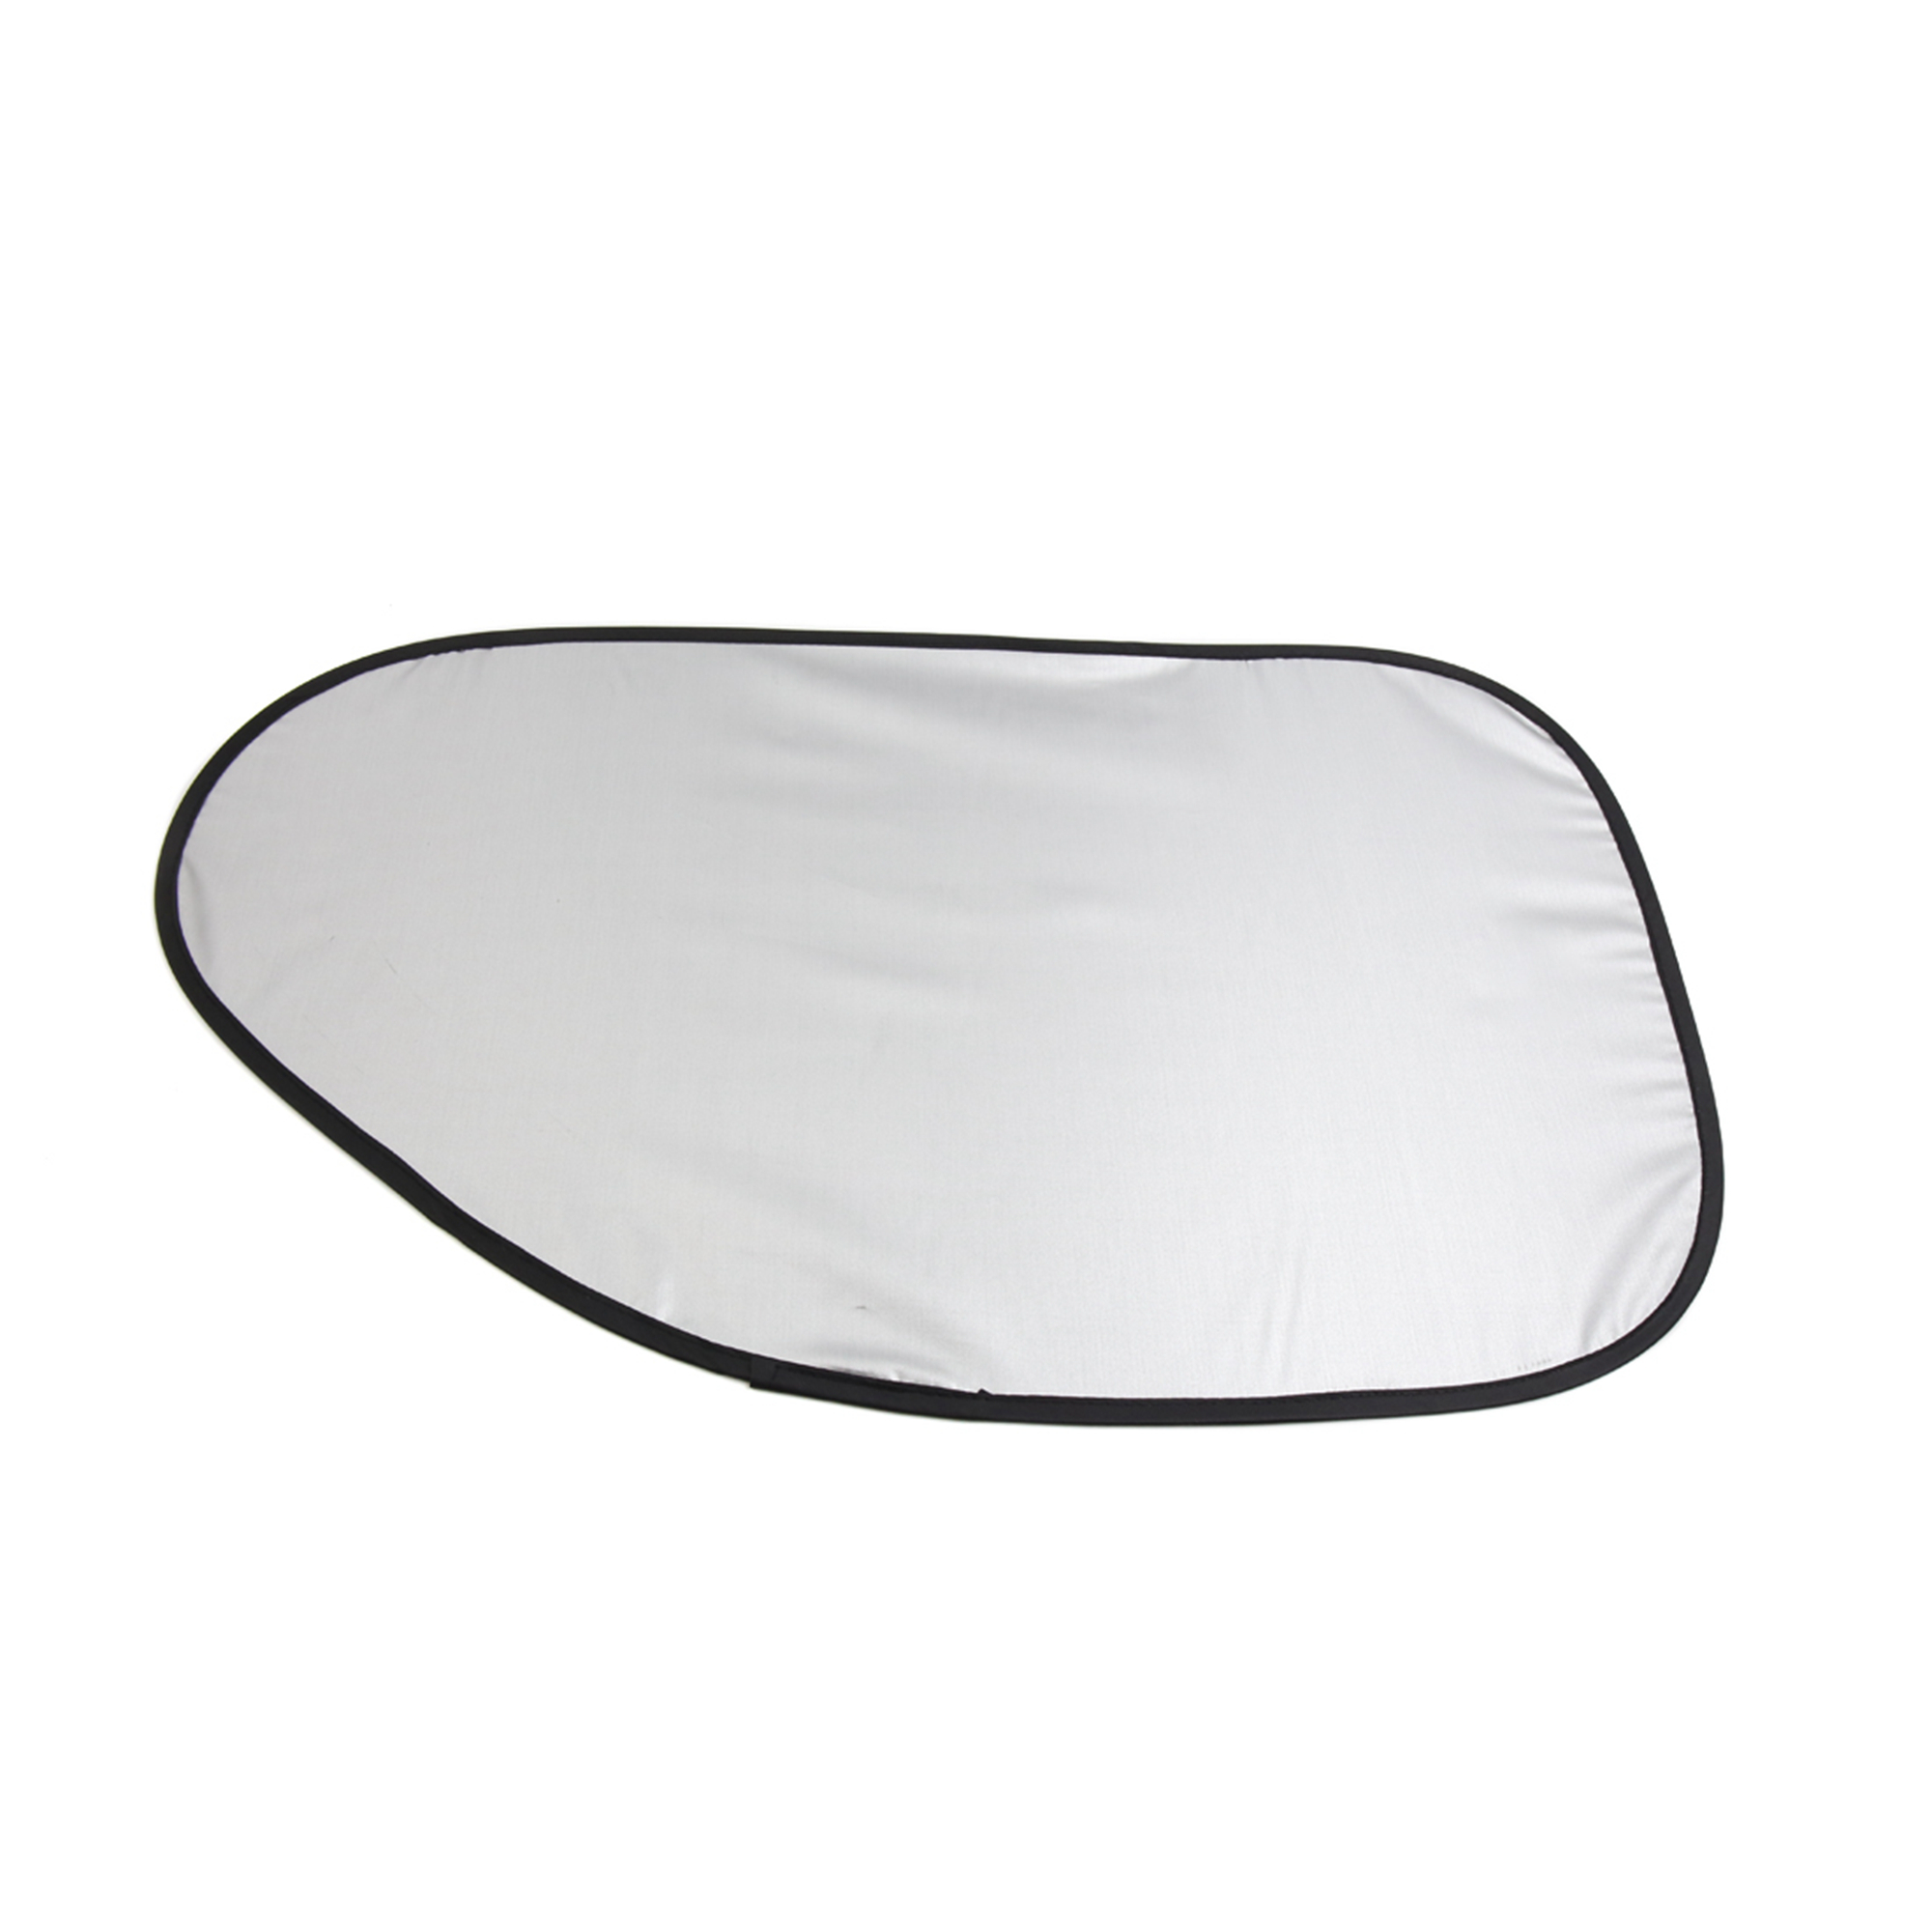 Unique Bargains 2 Pcs Silver Tone Side Rear Window Sun Shade Shield Visor UV Block Cover for Car